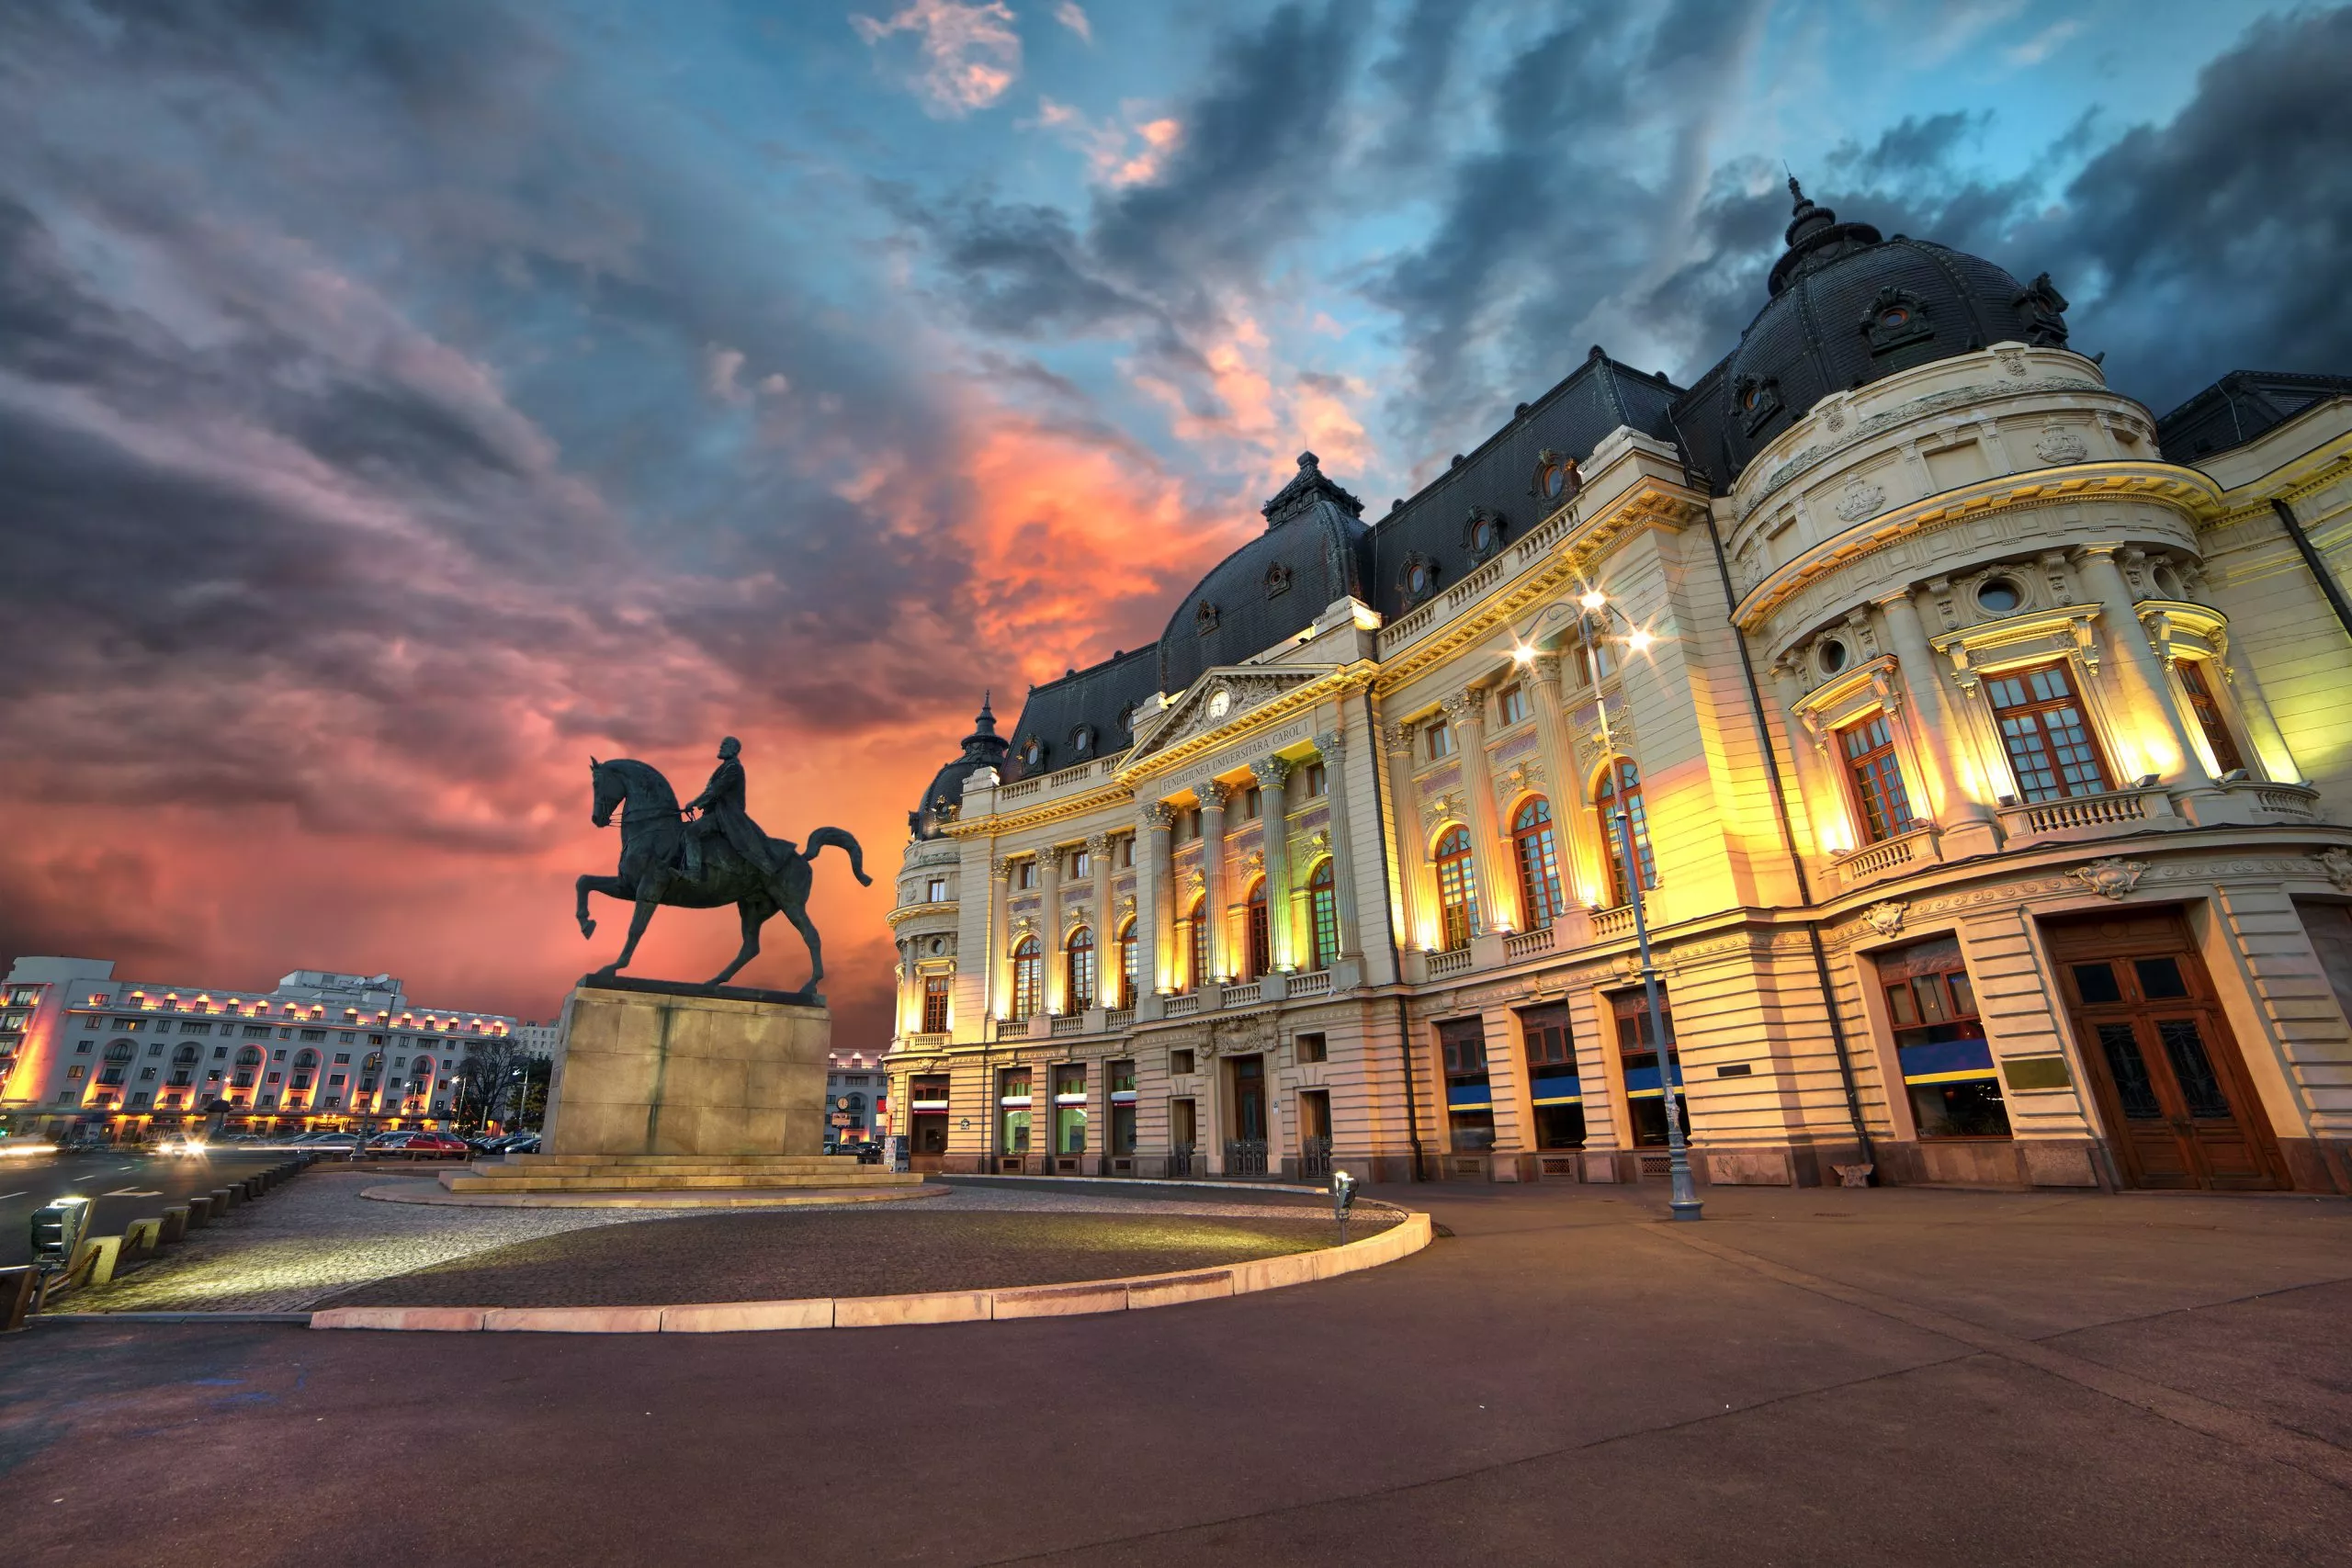 Solnedgang i Bukarest. Universitetsbibliotek om natten